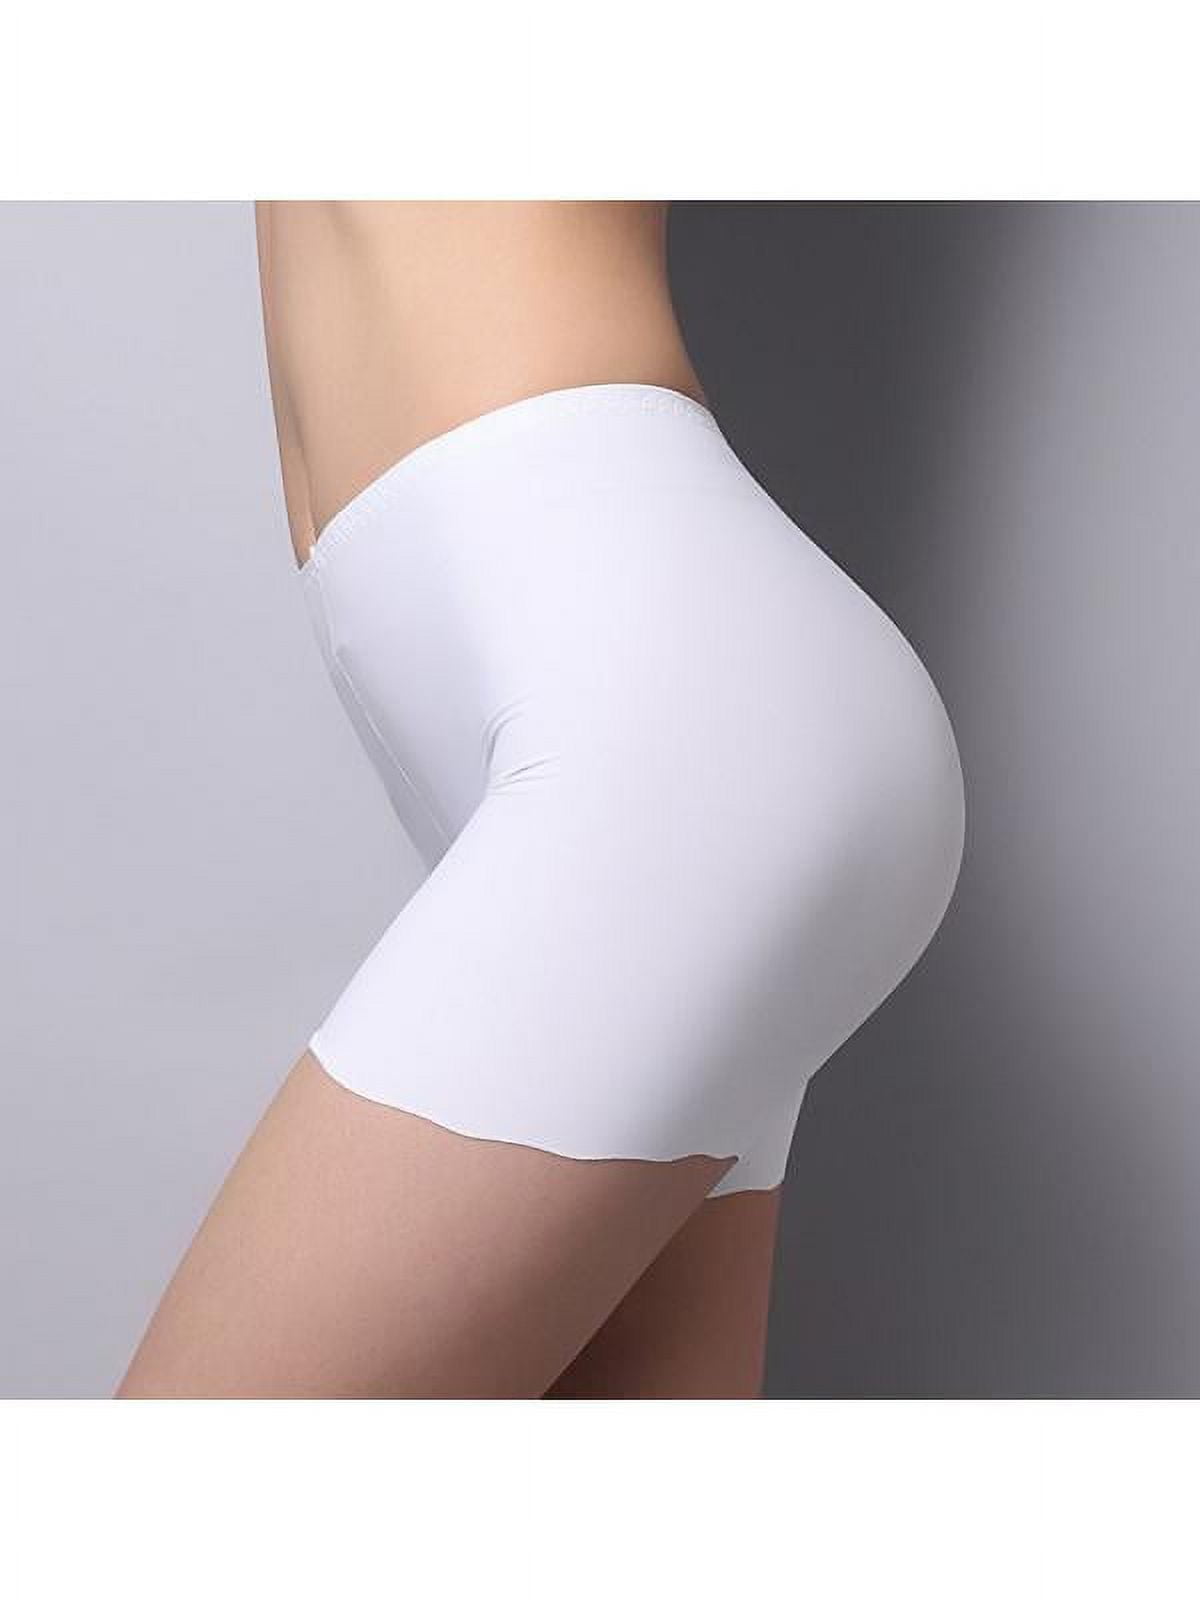 Slip Shorts Compatible Women Under Dress,seamless Smooth Underwear Lace  Thigh Panties Safety Shorts Shorts Under Skirt